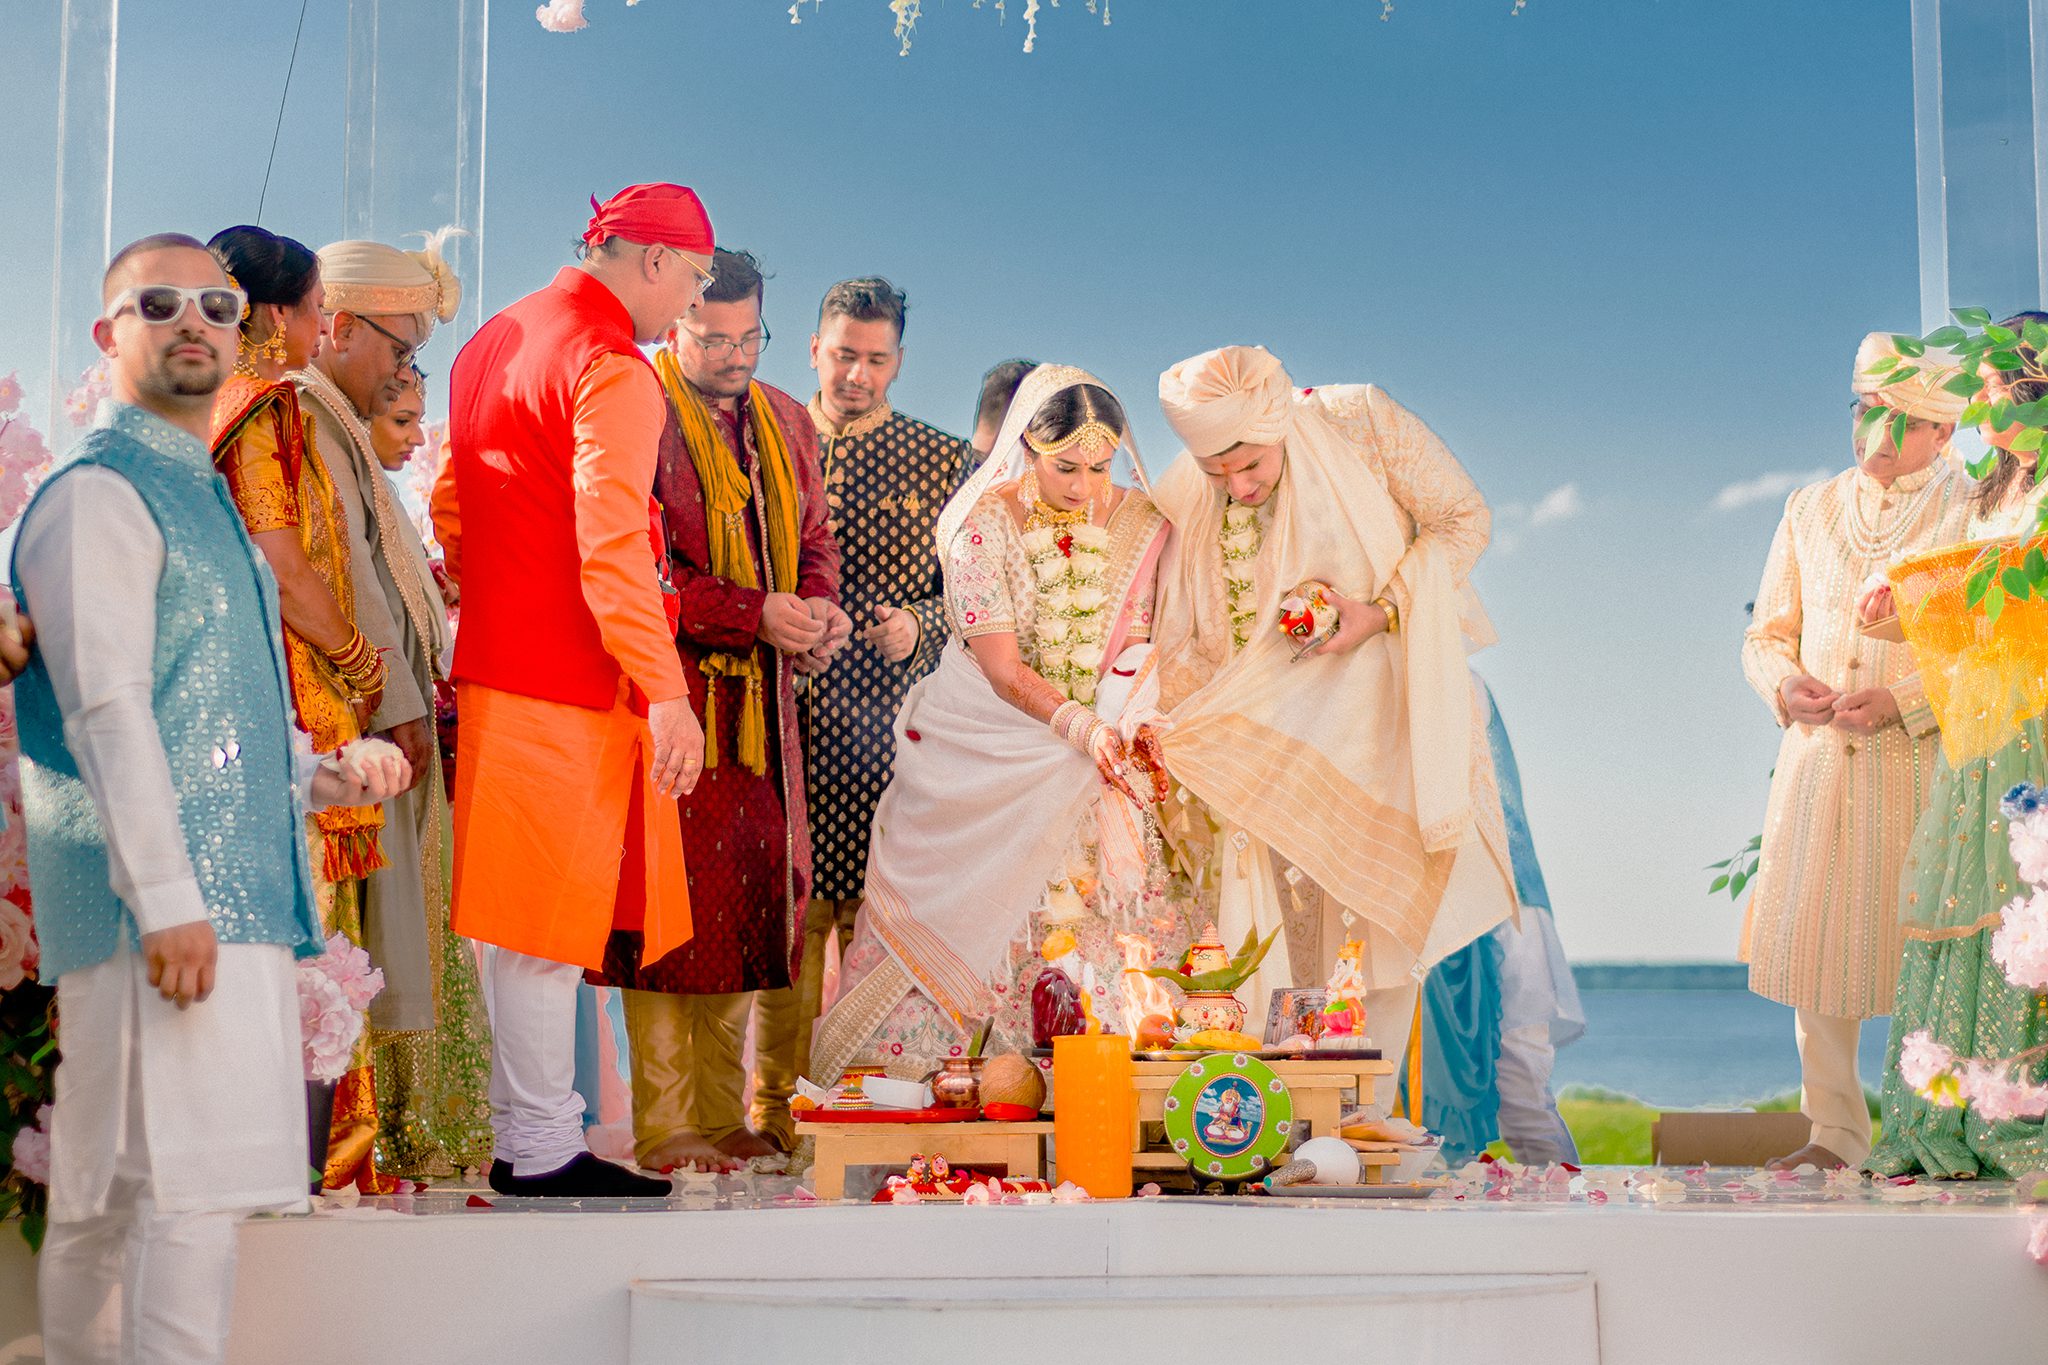 Hyatt Regency Chesapeake Bay Indian Wedding, Hyatt Regency Chesapeake Bay Indian Wedding of Vibhuti and Chirag